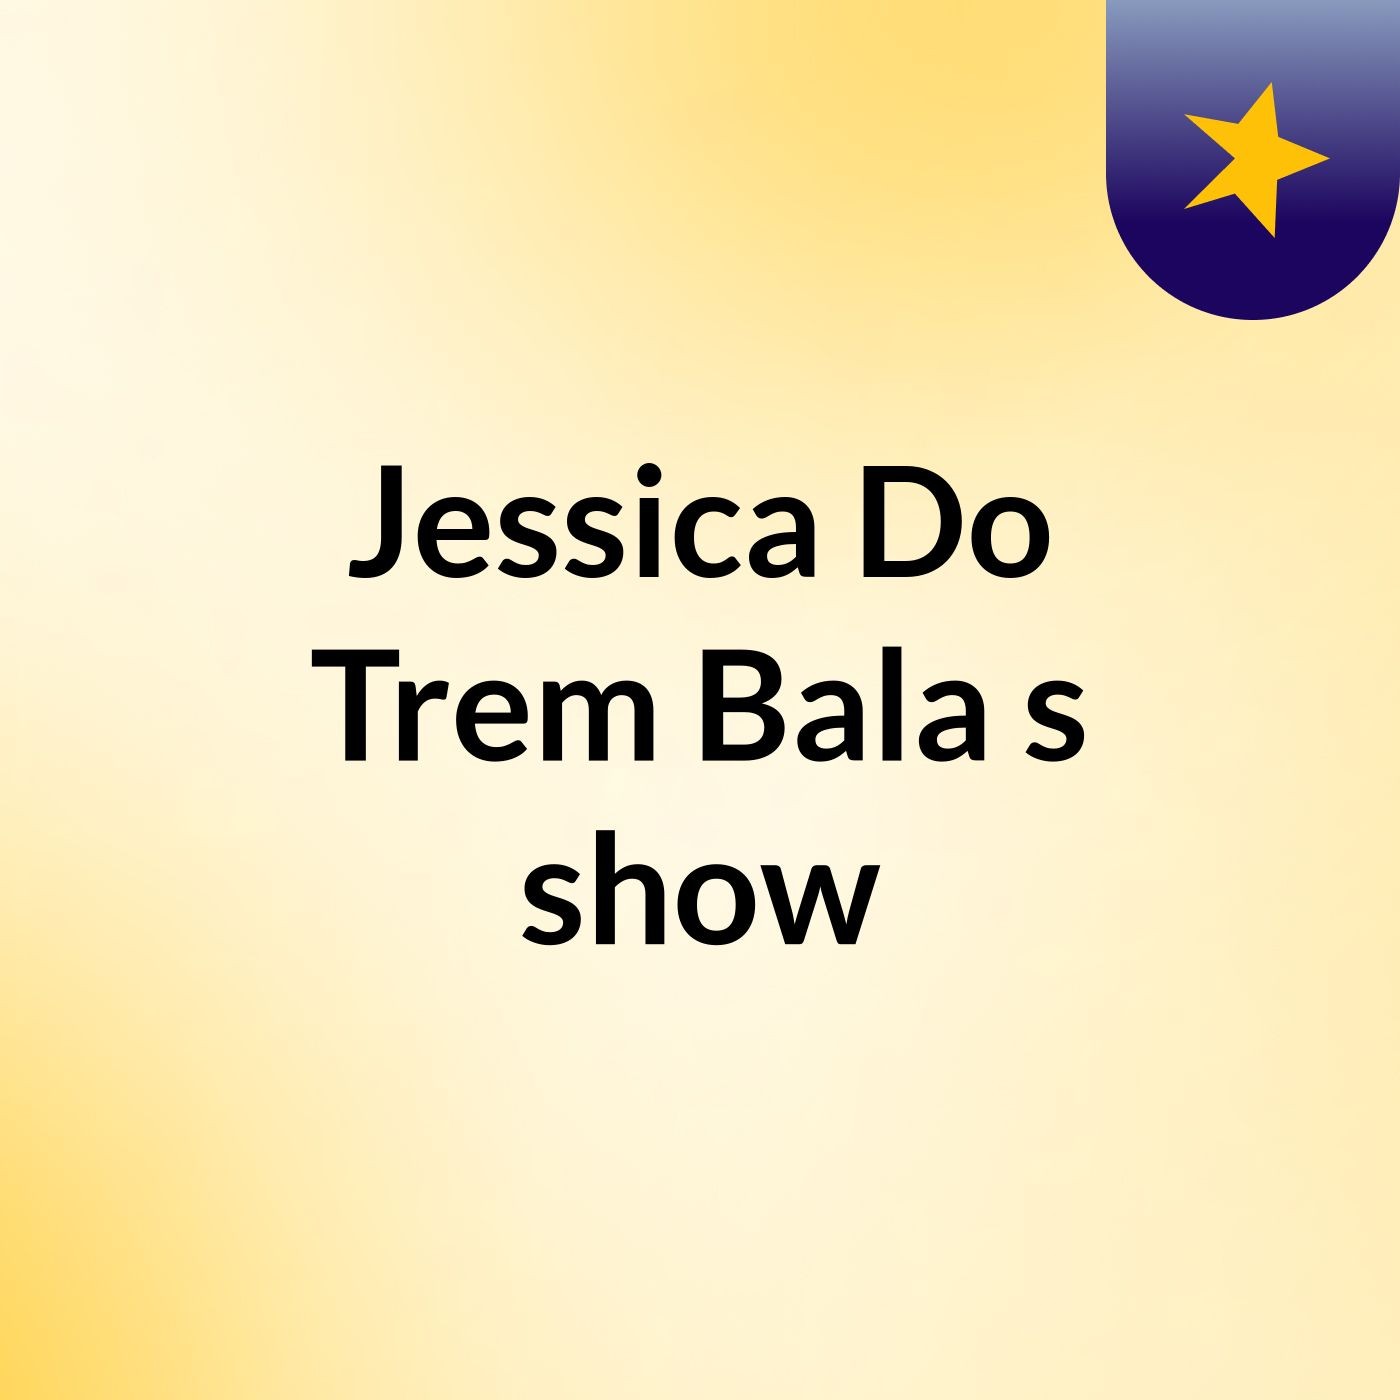 Jessica Do Trem Bala's show